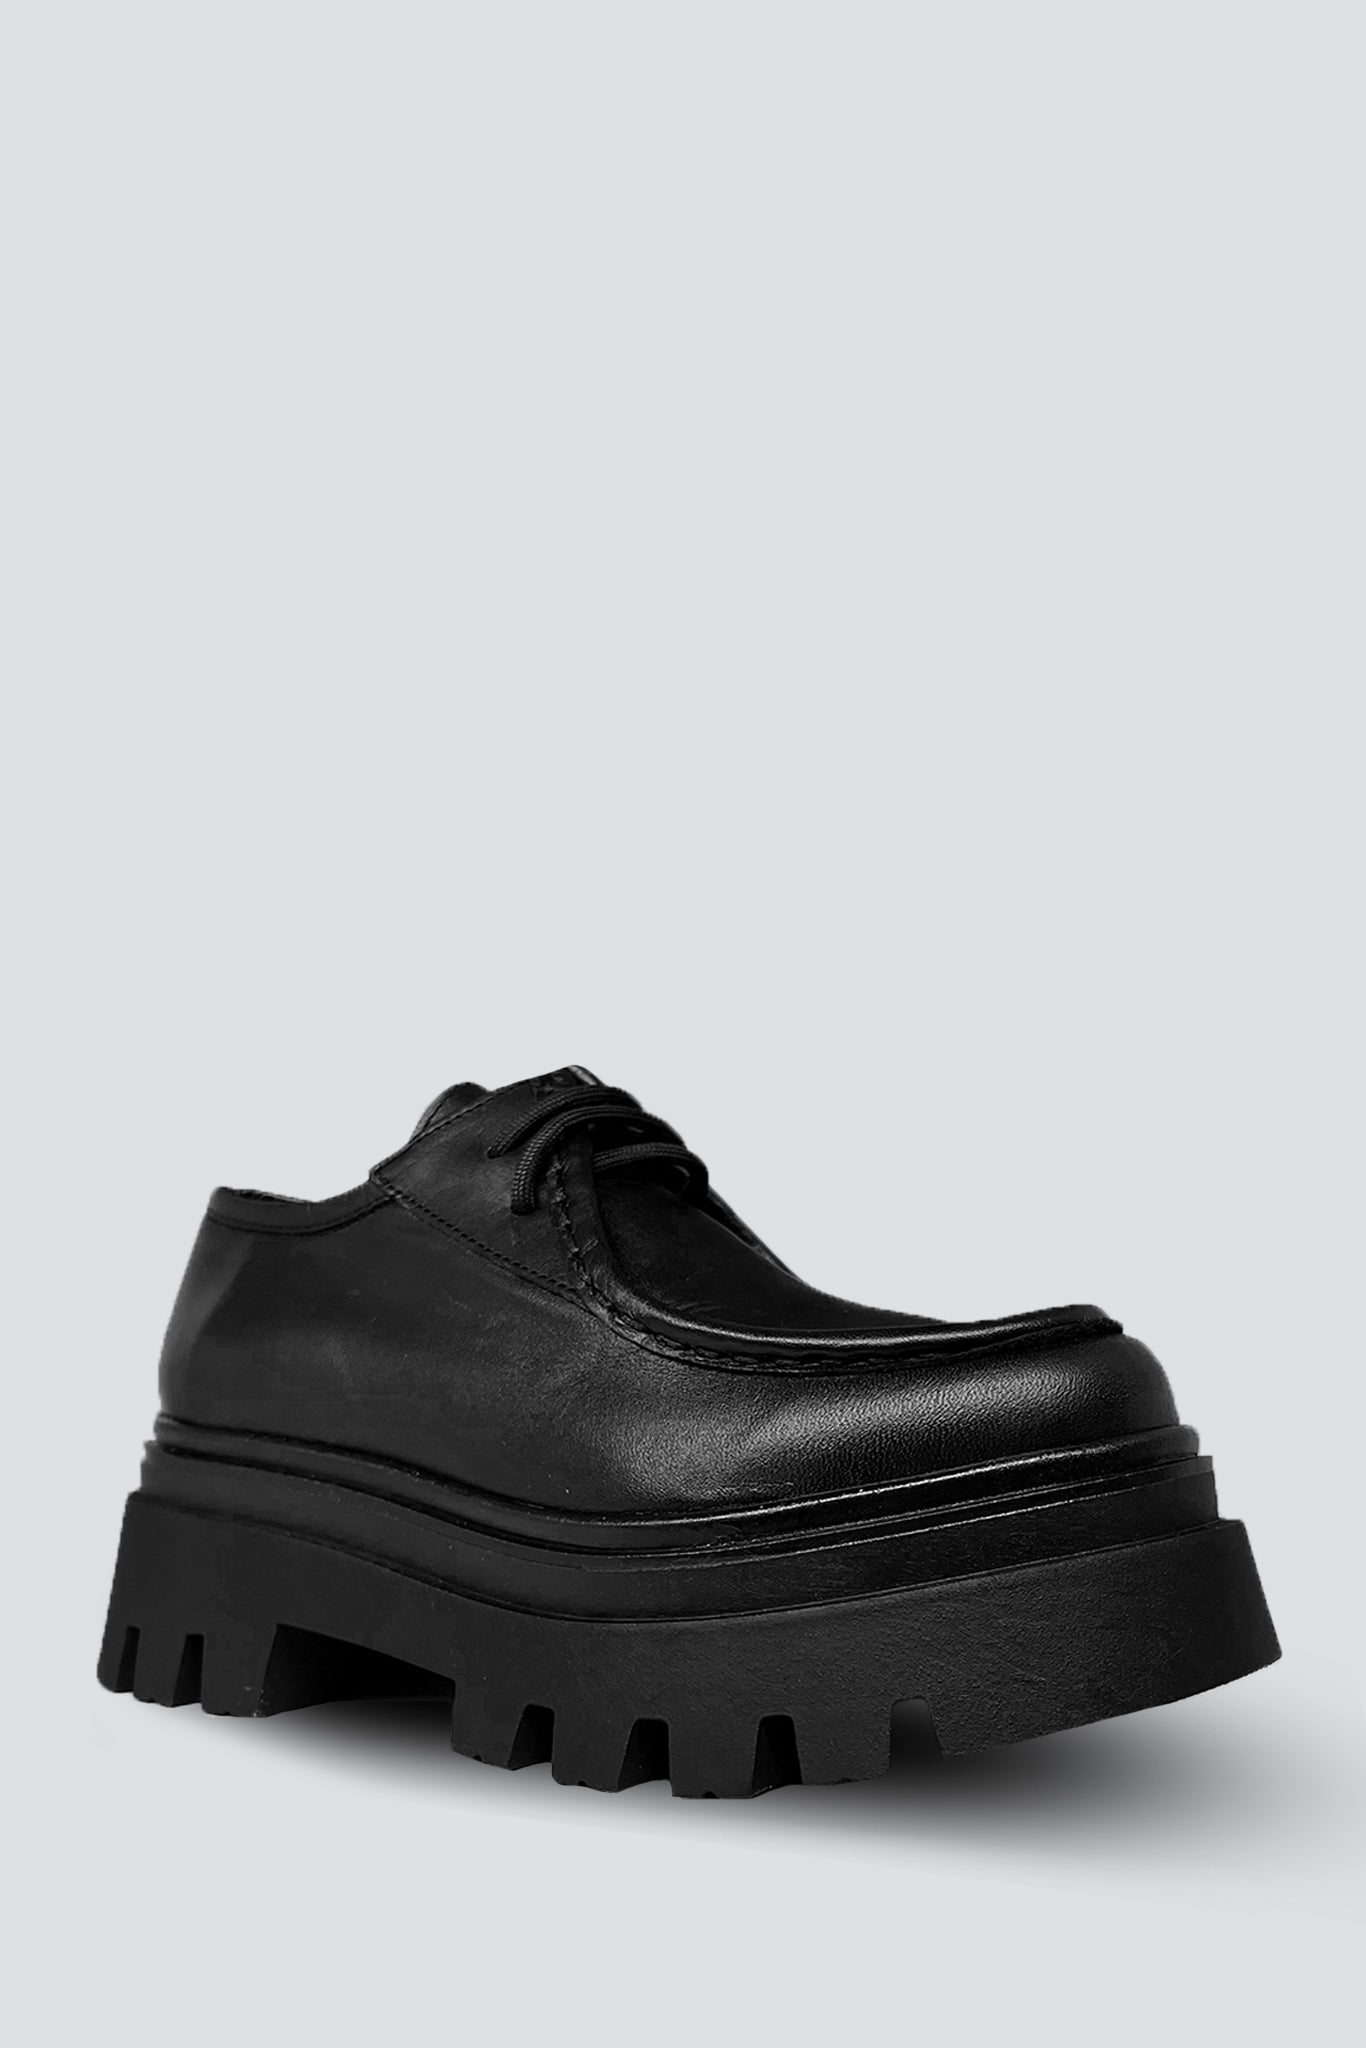 Black Leather Tycoon Shoe